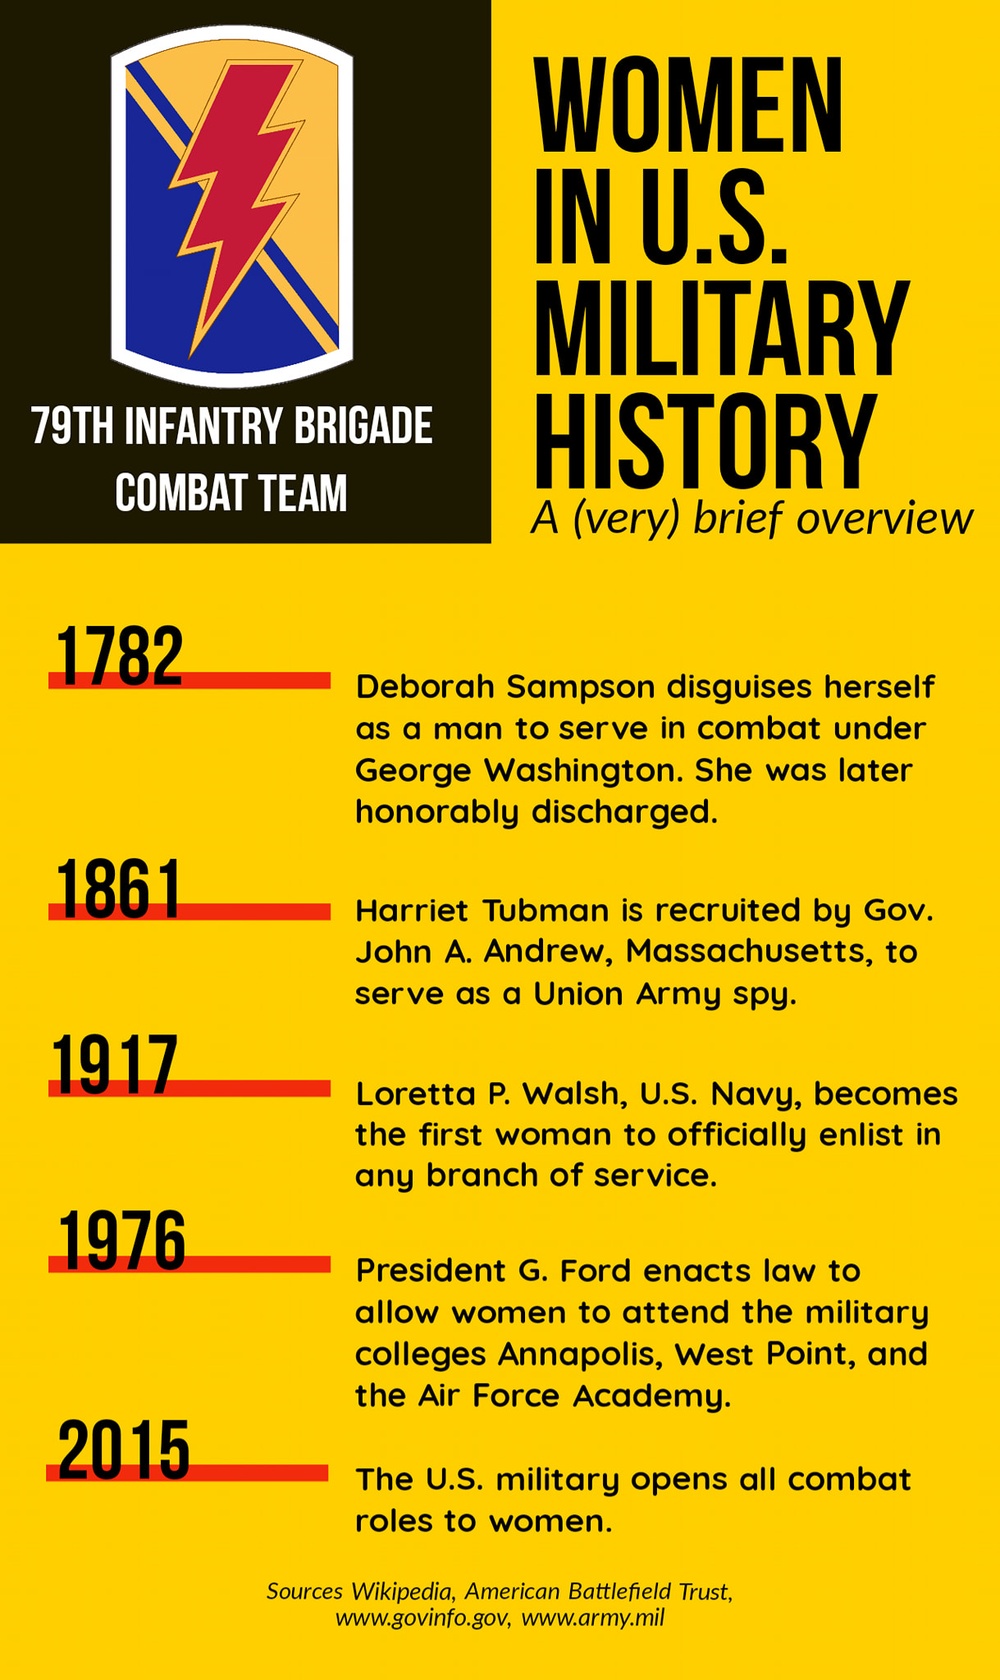 Women in U.S. Military History